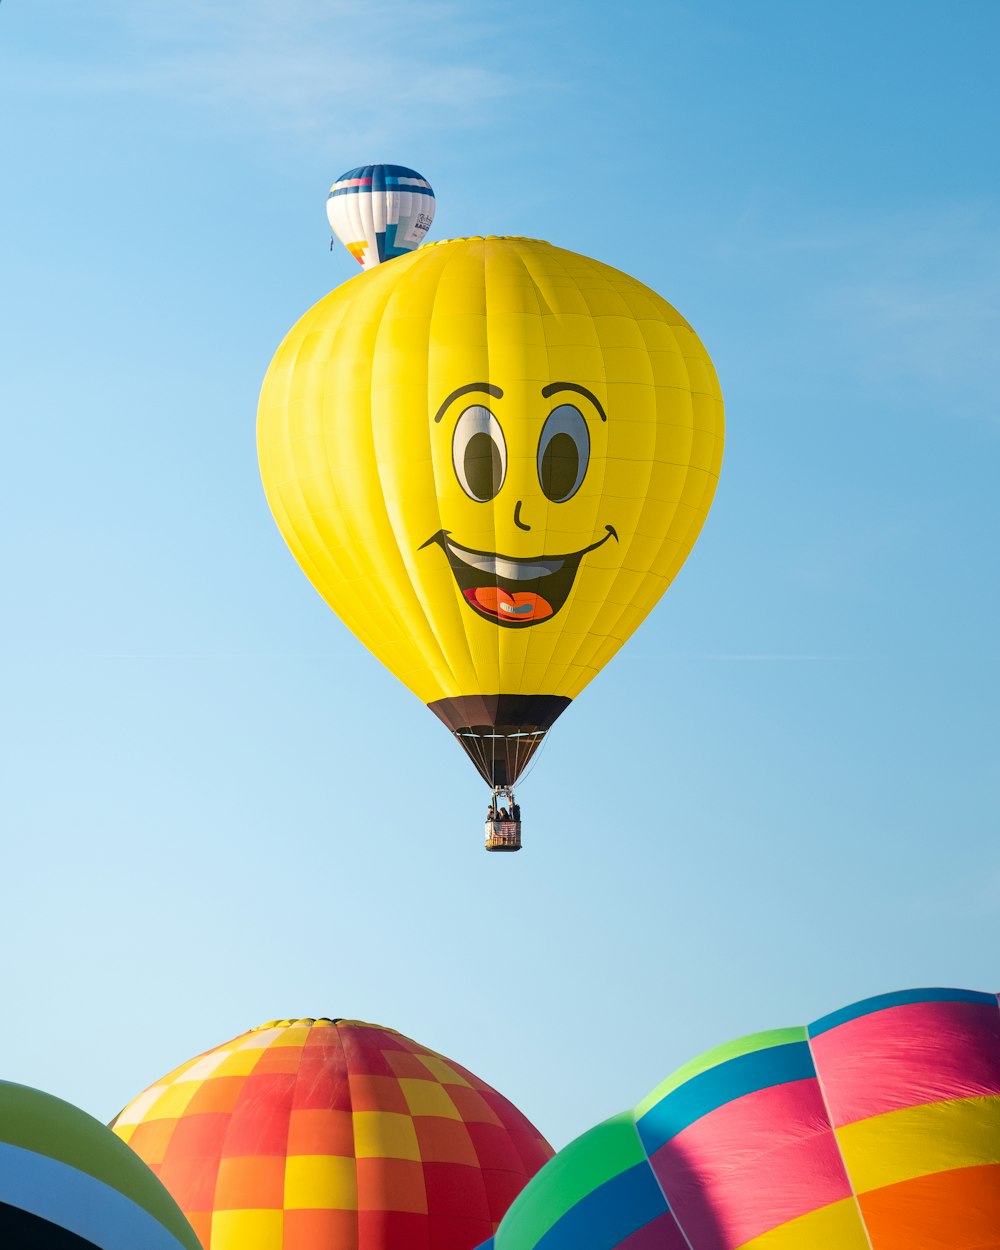 a yellow hot air balloon with a smiley face